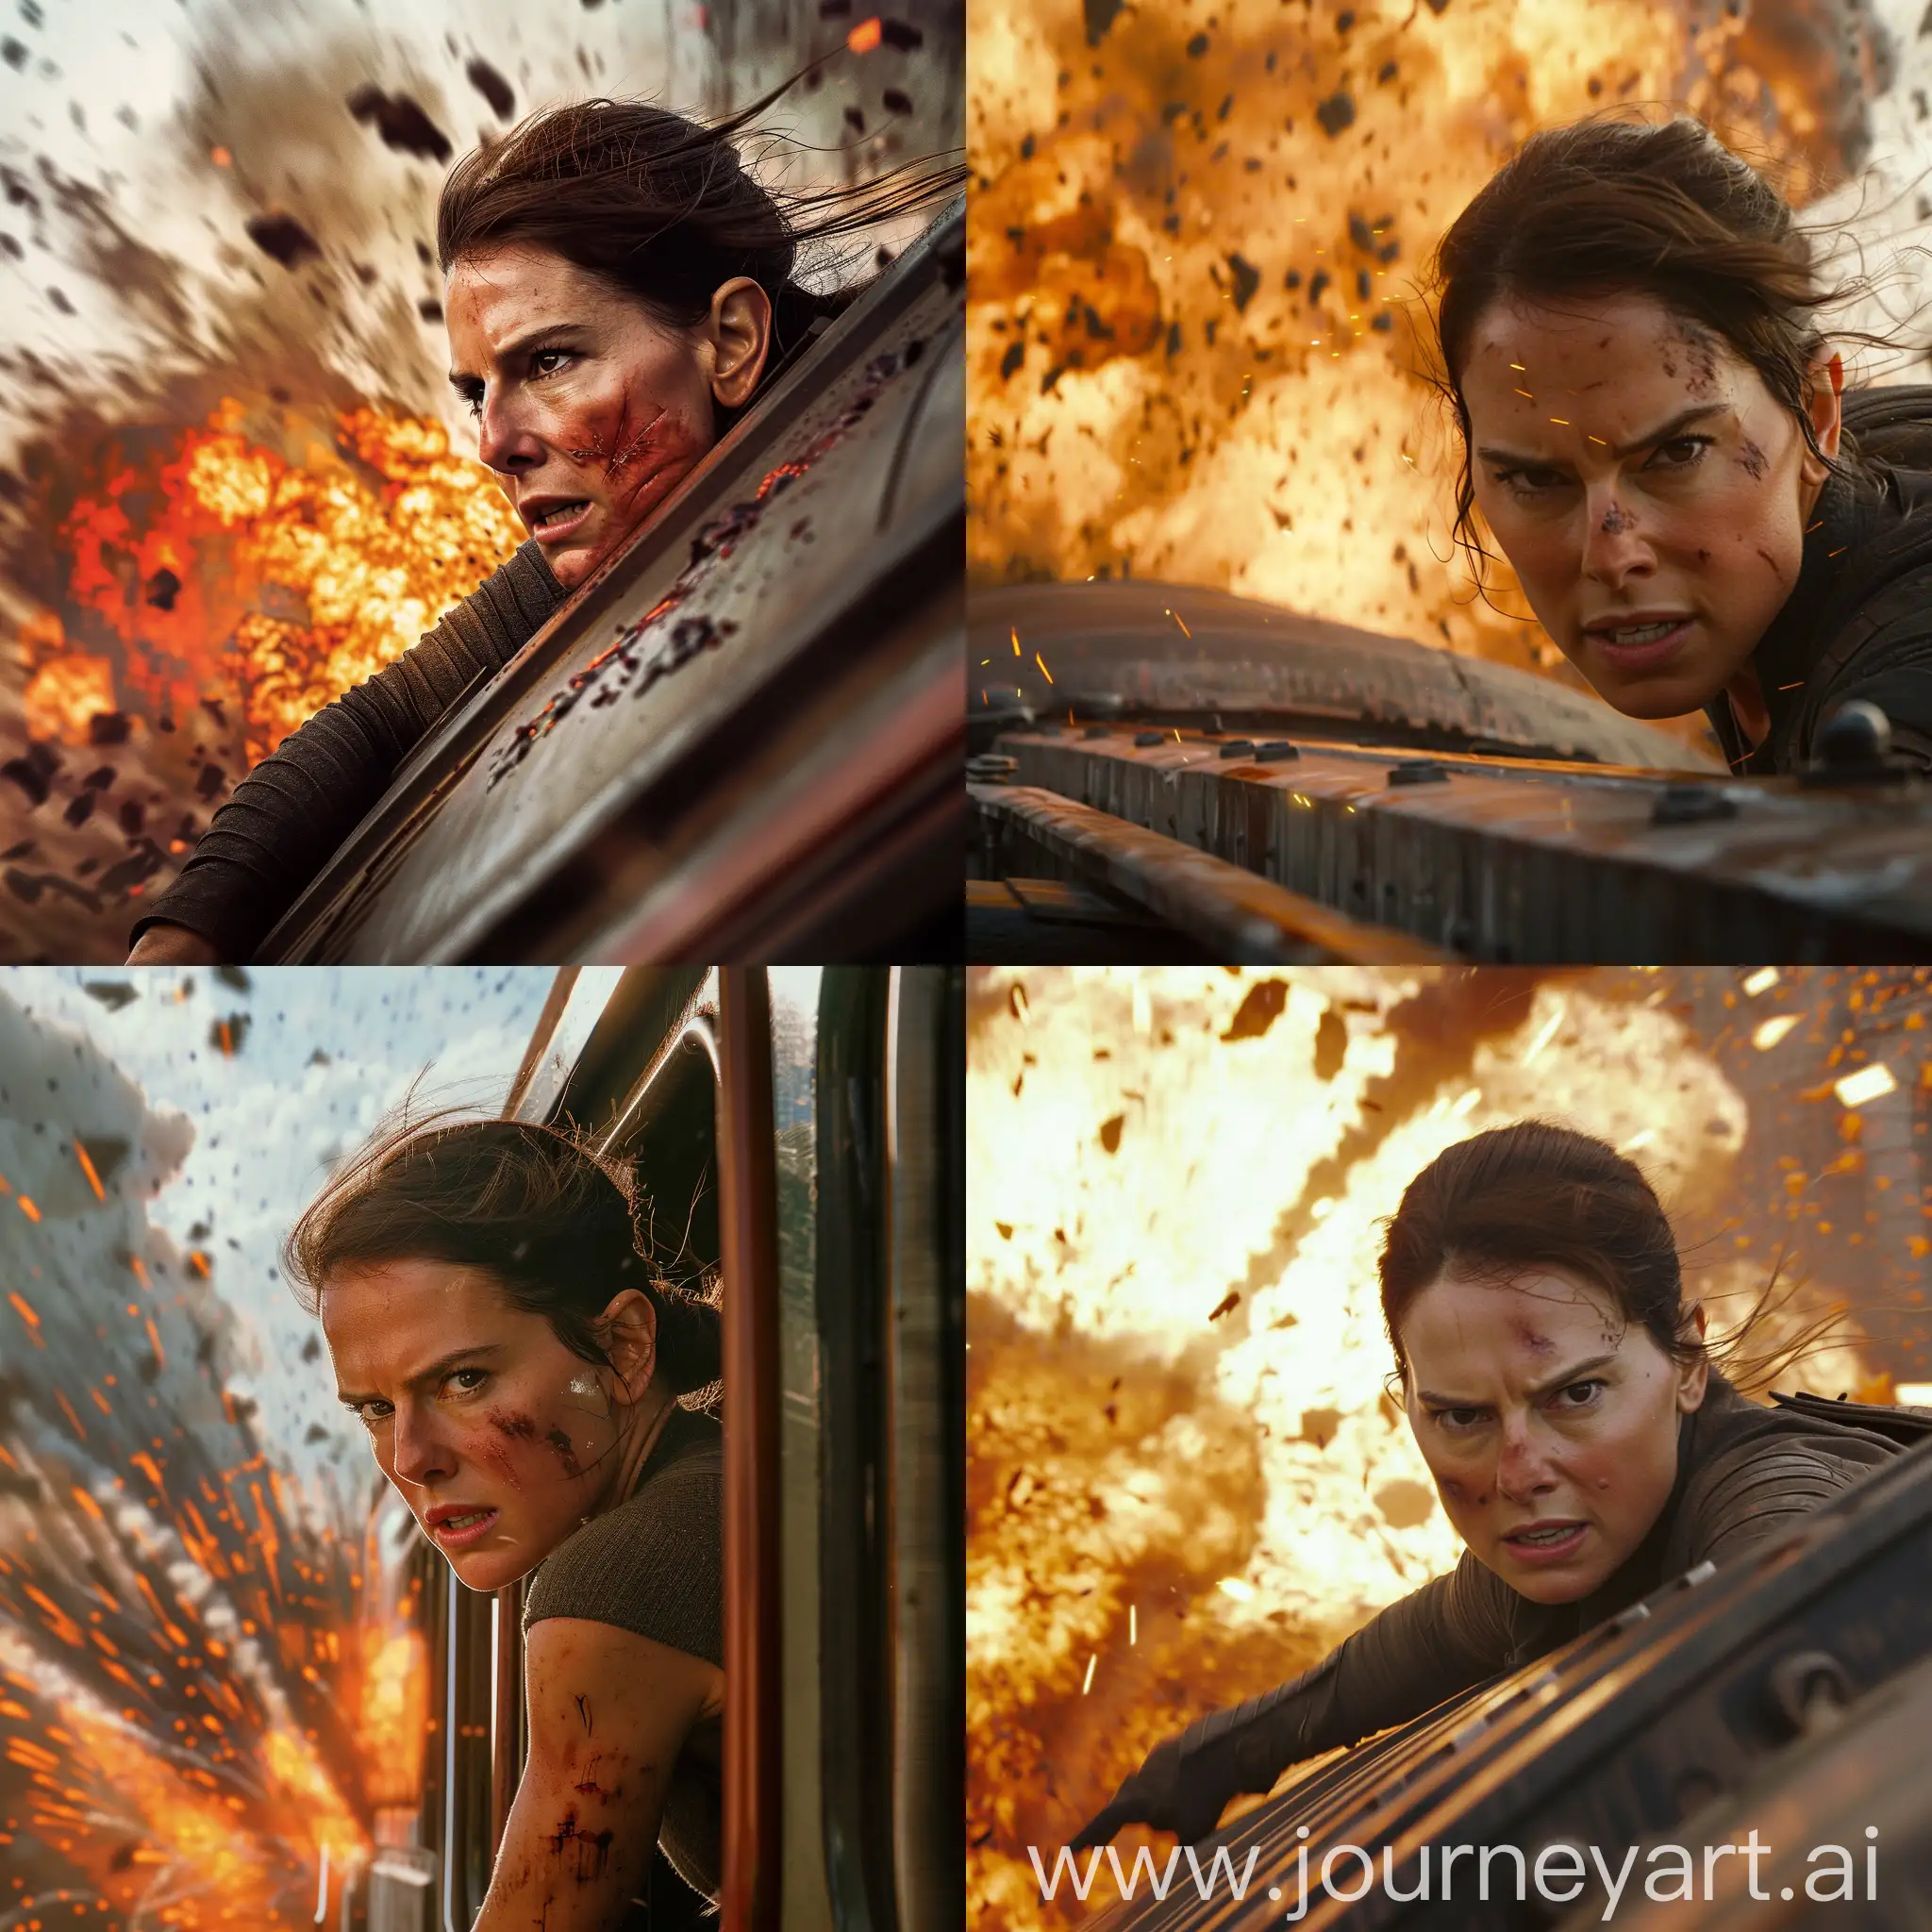 Daisy-Ridley-Portrays-Rey-Skywalker-in-HighStakes-Train-Scene-Alongside-Tom-Cruise-Explosive-Action